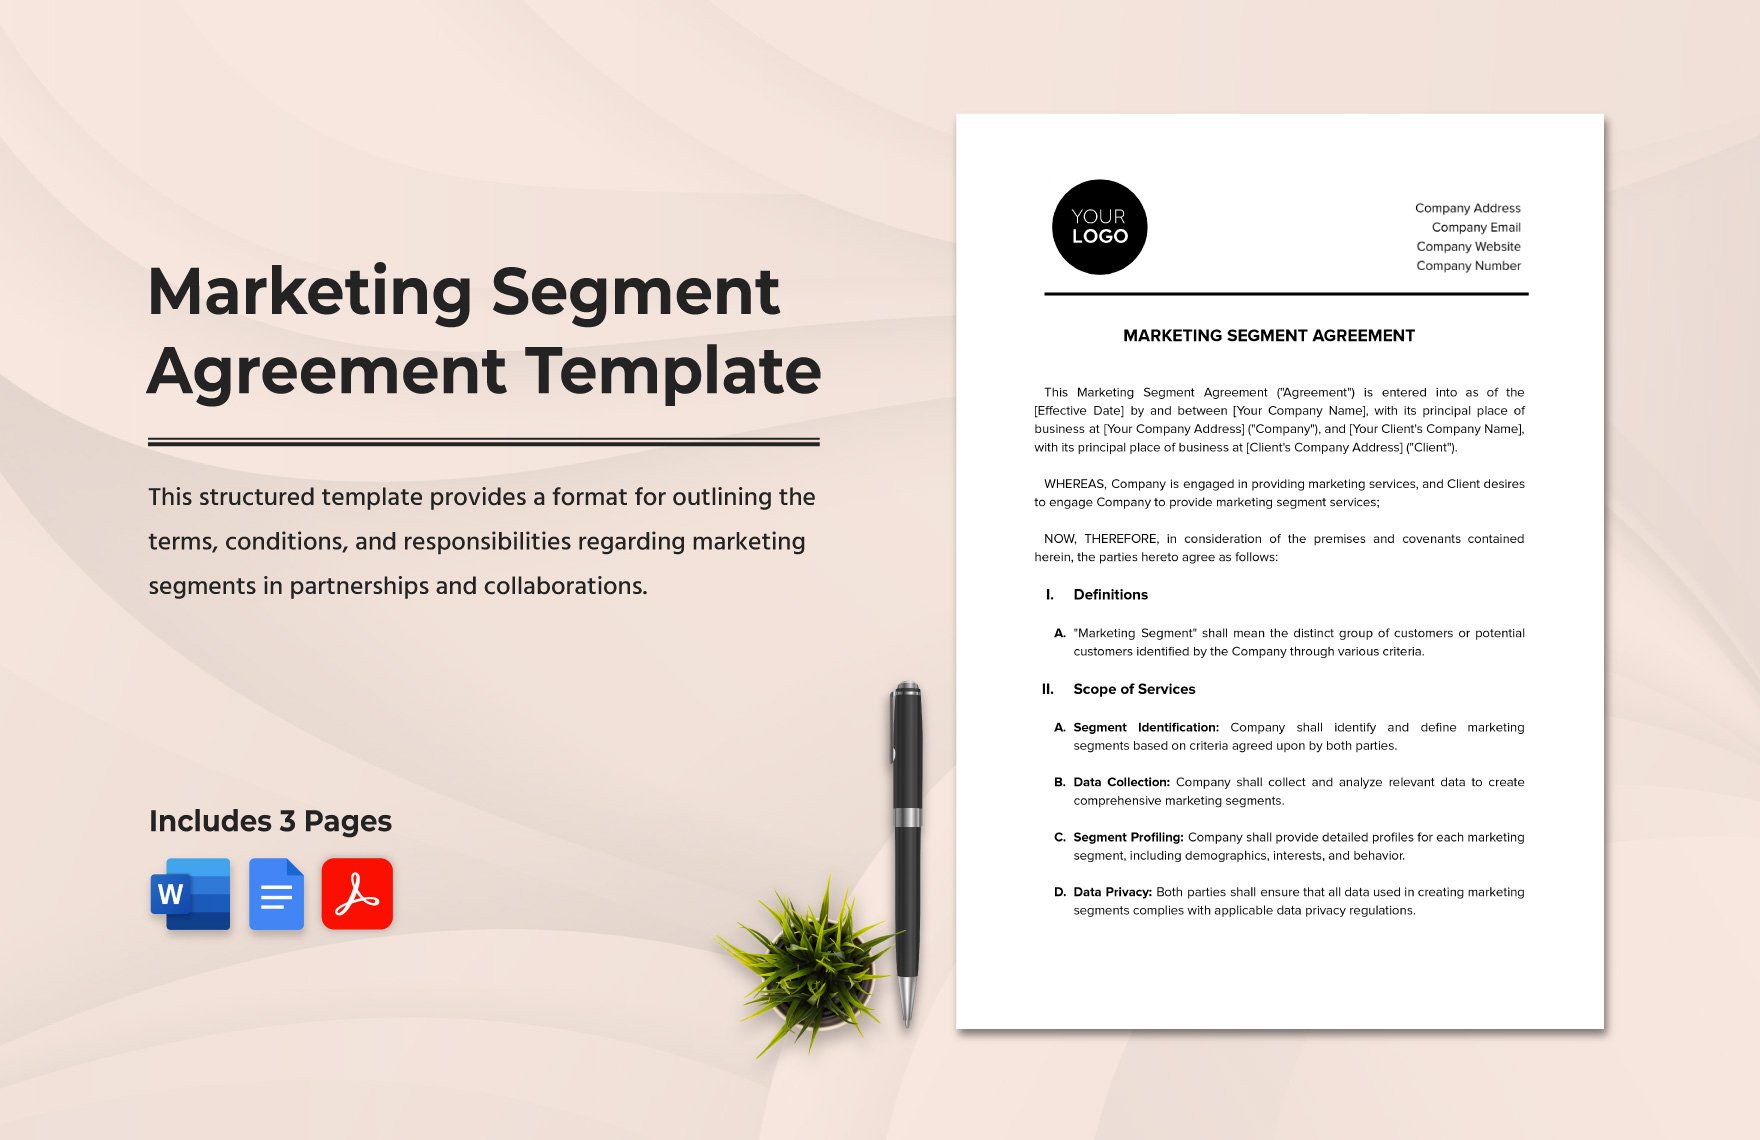 Marketing Segment Agreement Template in Word, Google Docs, PDF